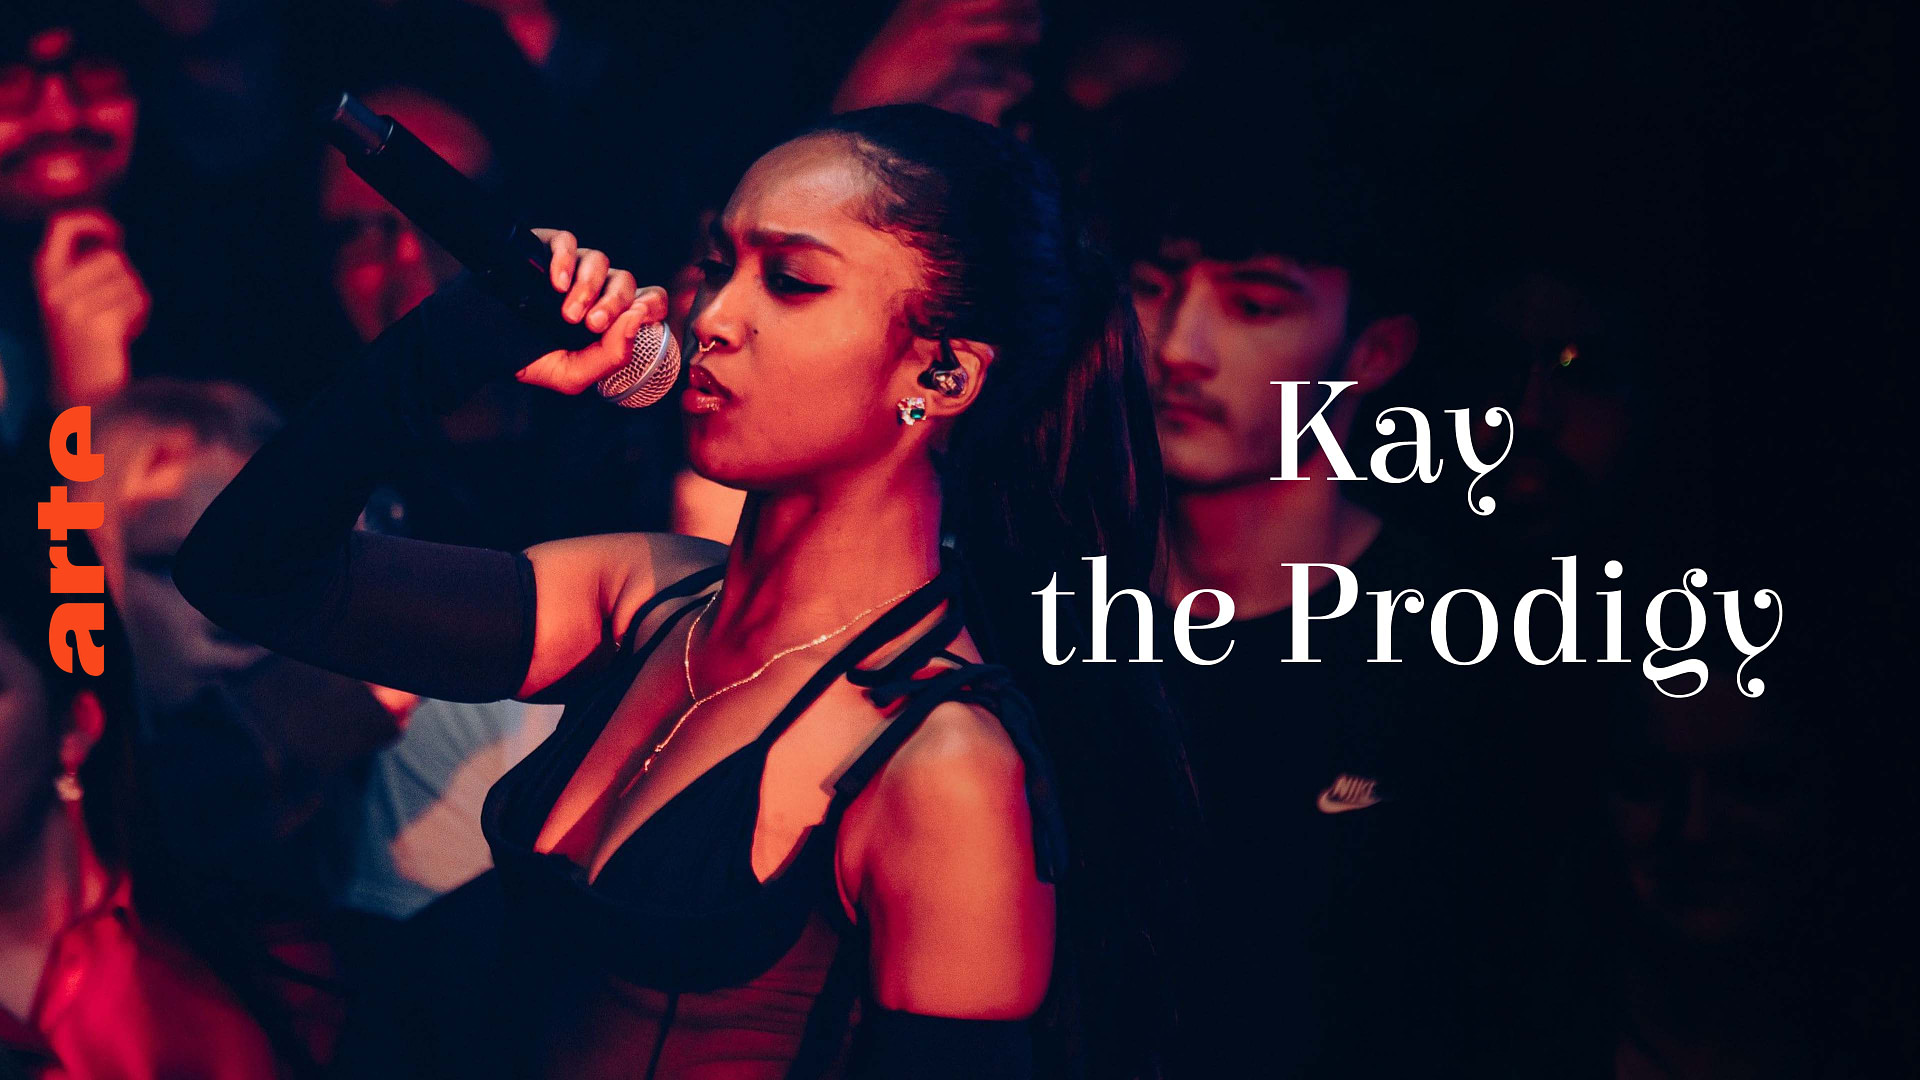 Kay the Prodigy